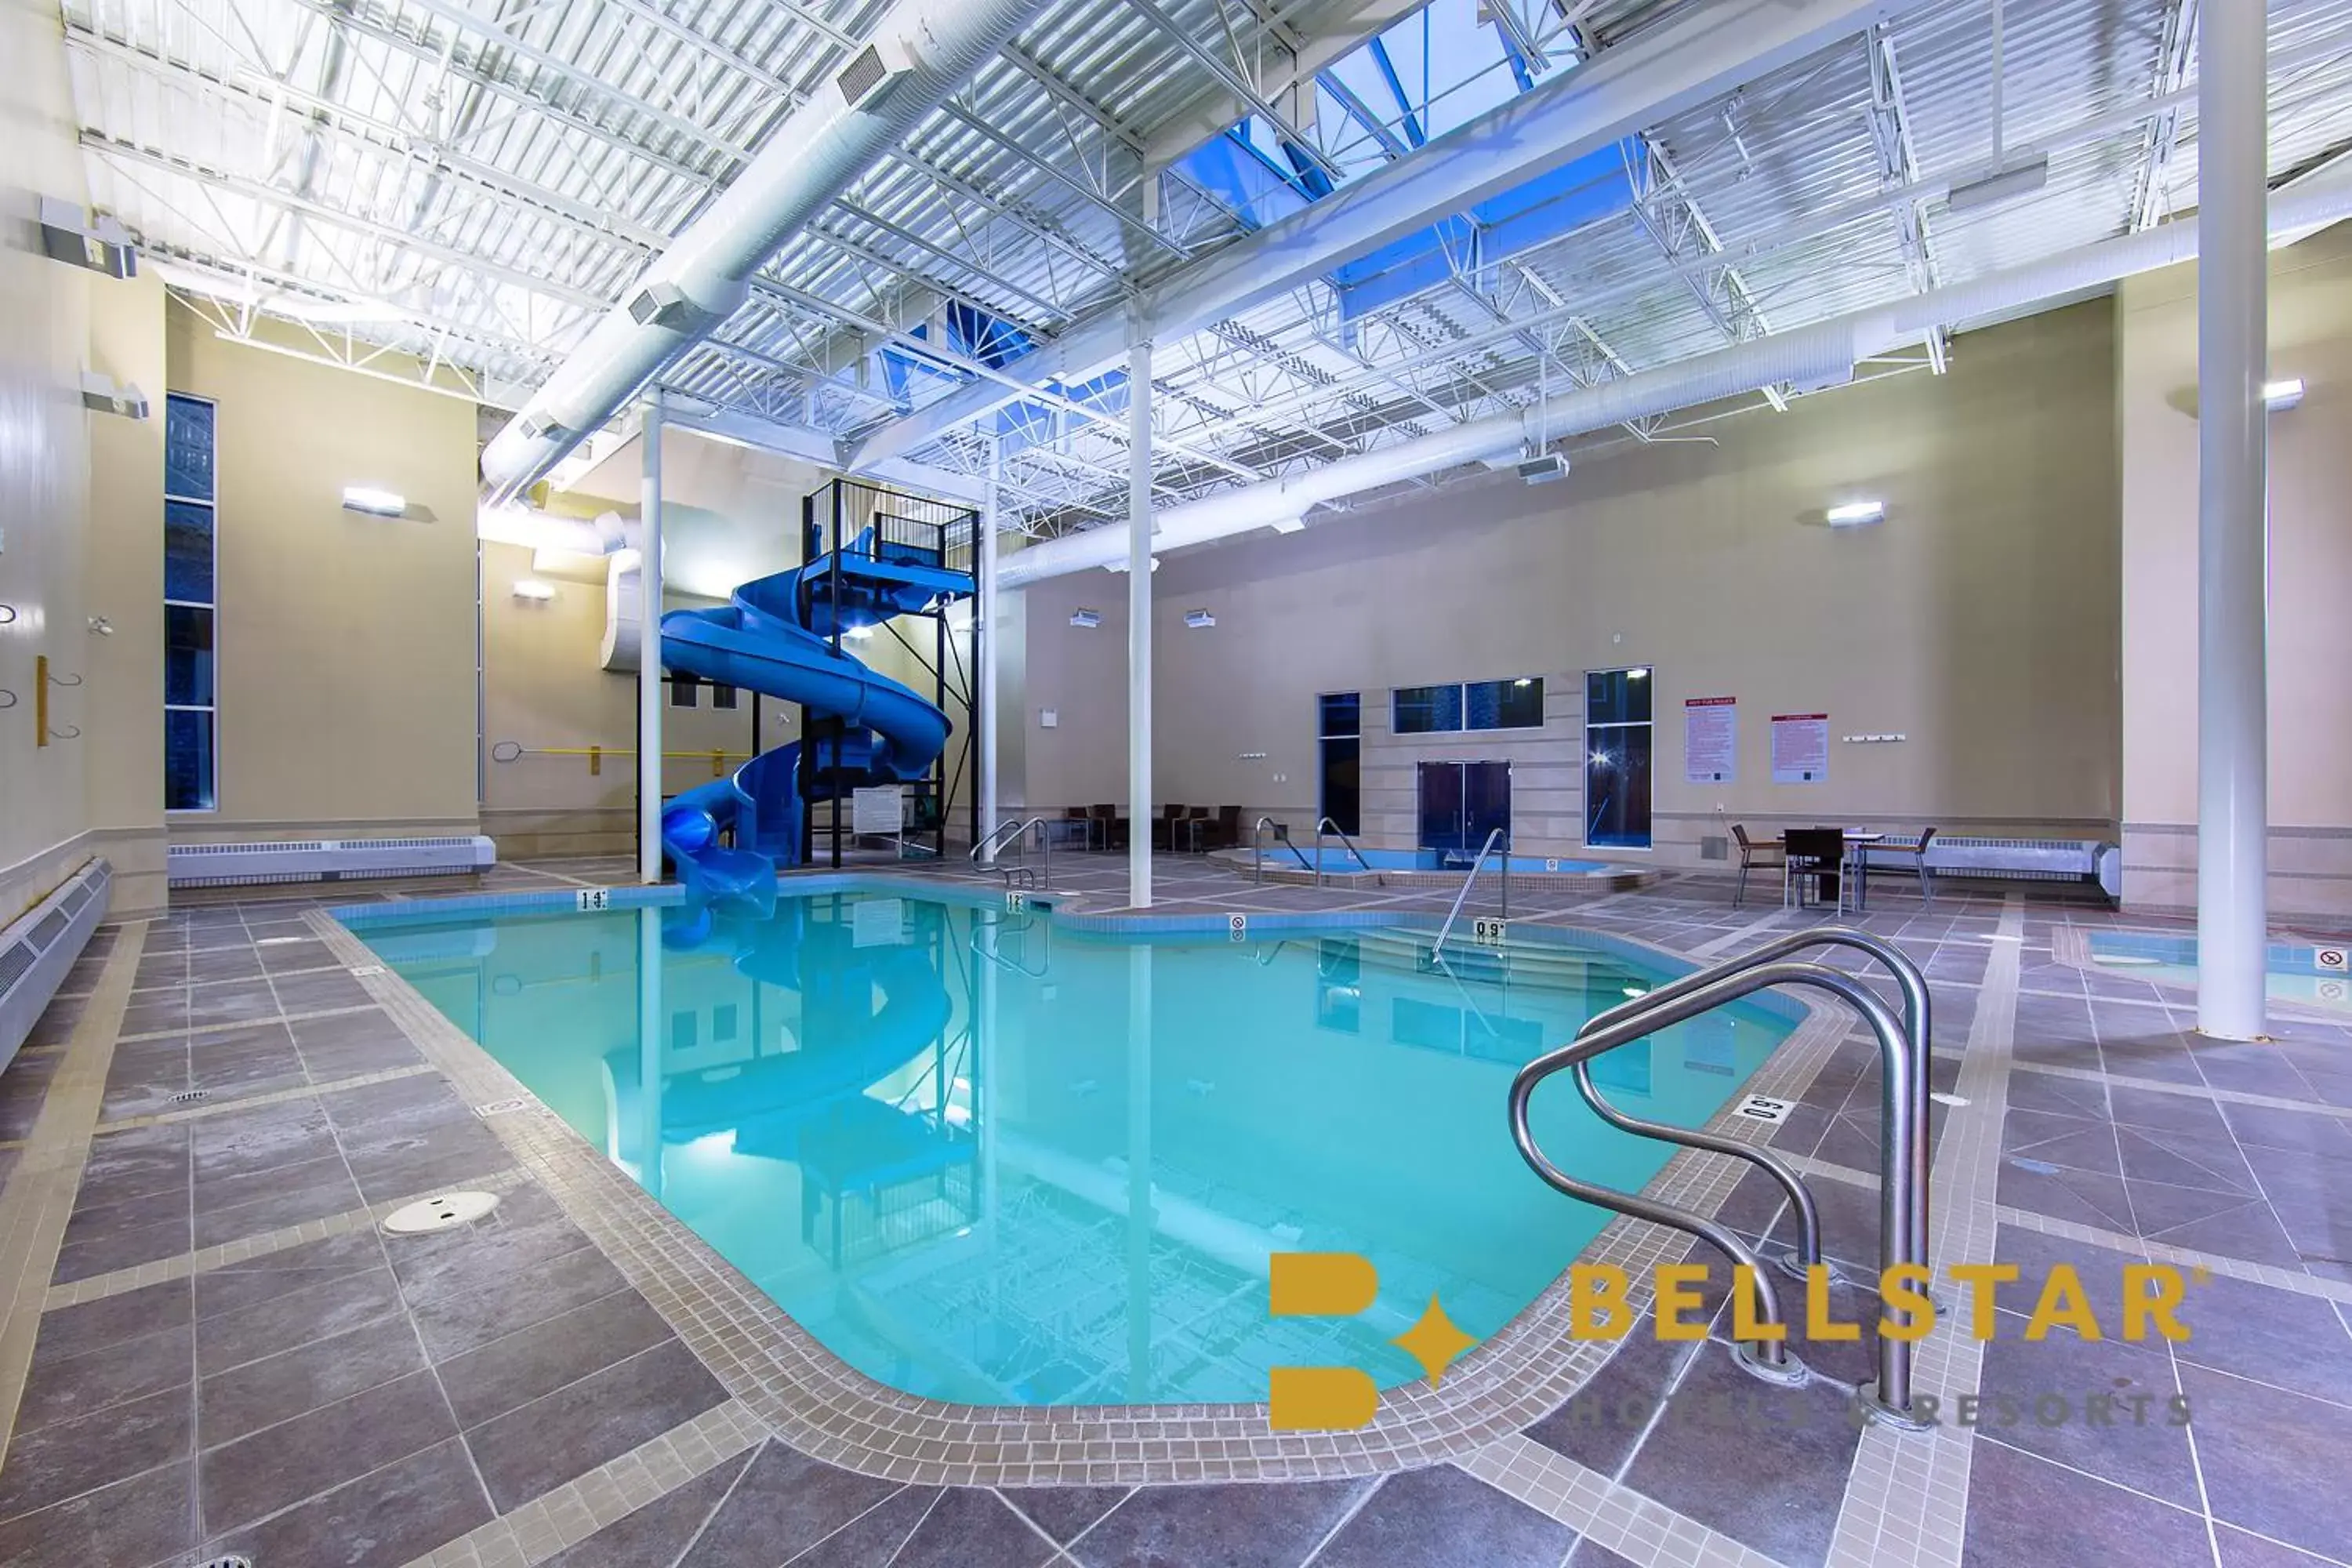 Swimming Pool in Grande Rockies Resort-Bellstar Hotels & Resorts